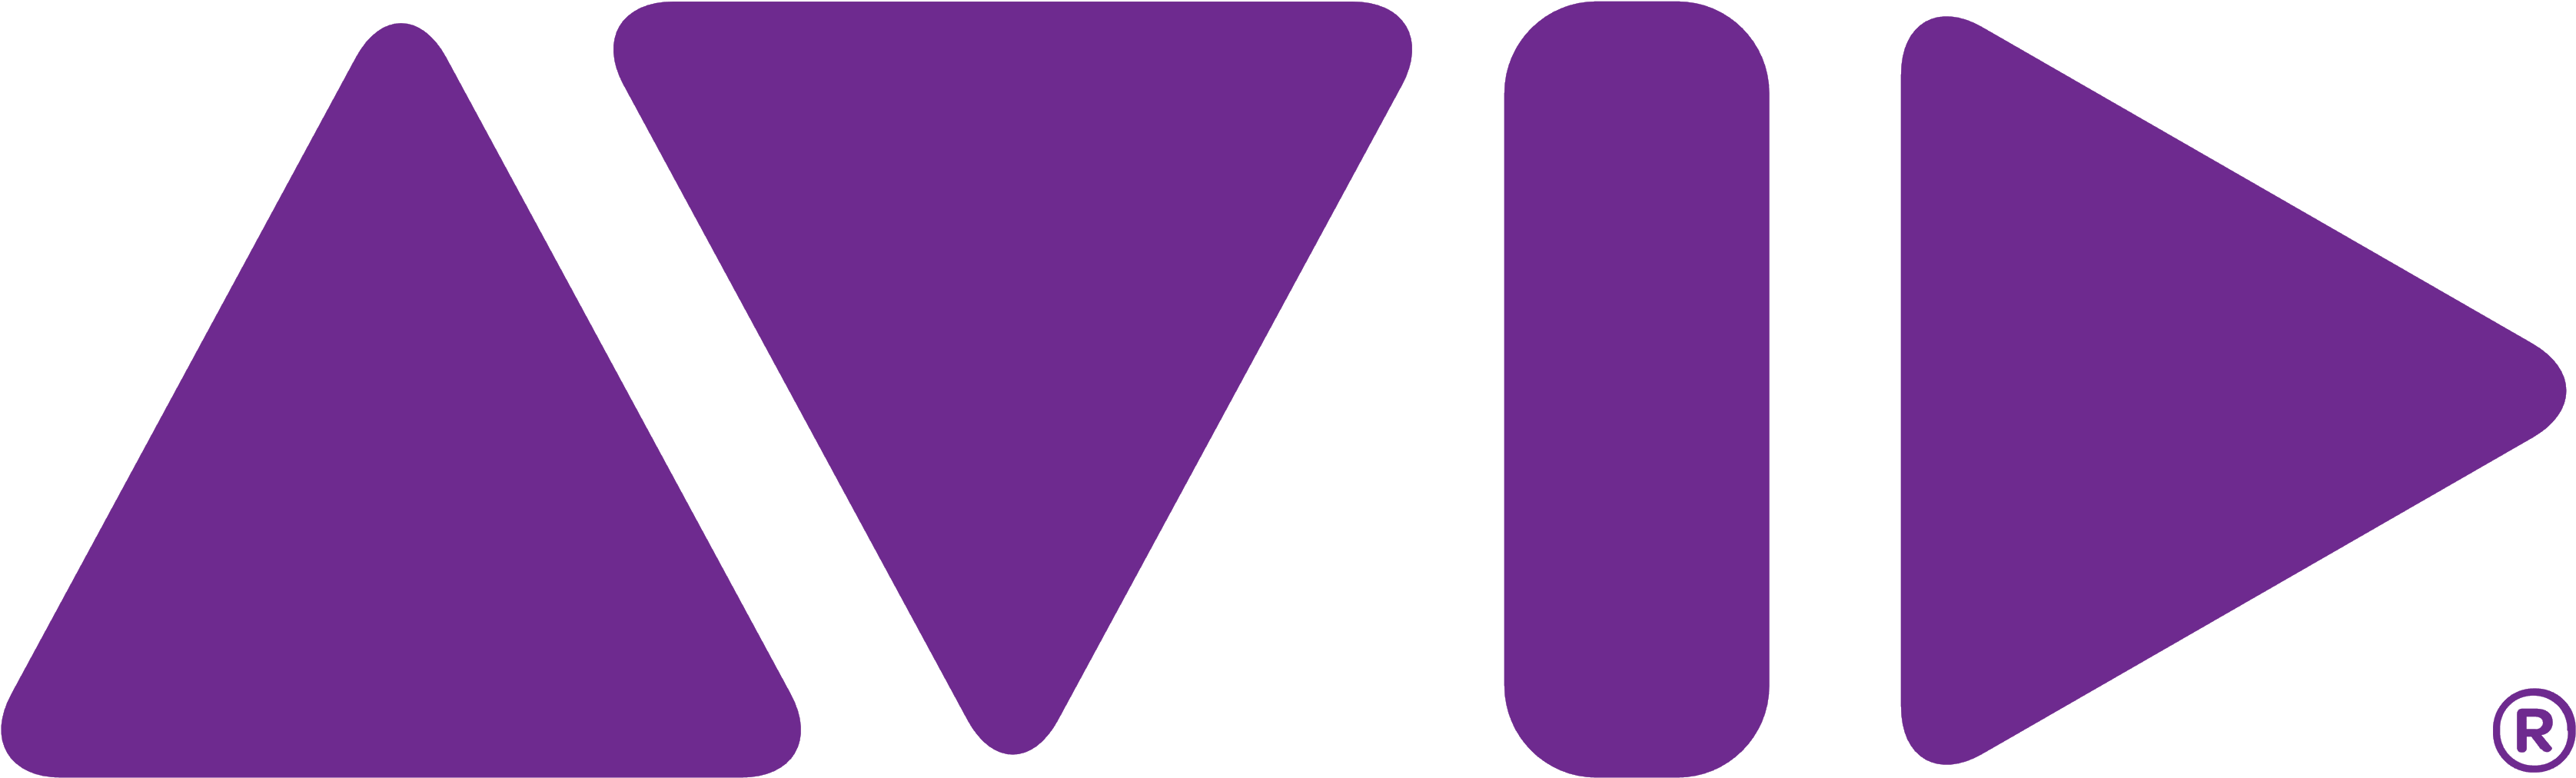 Avid Logo Purple - Avid Technology Logo Png Clipart (1280x422), Png Download